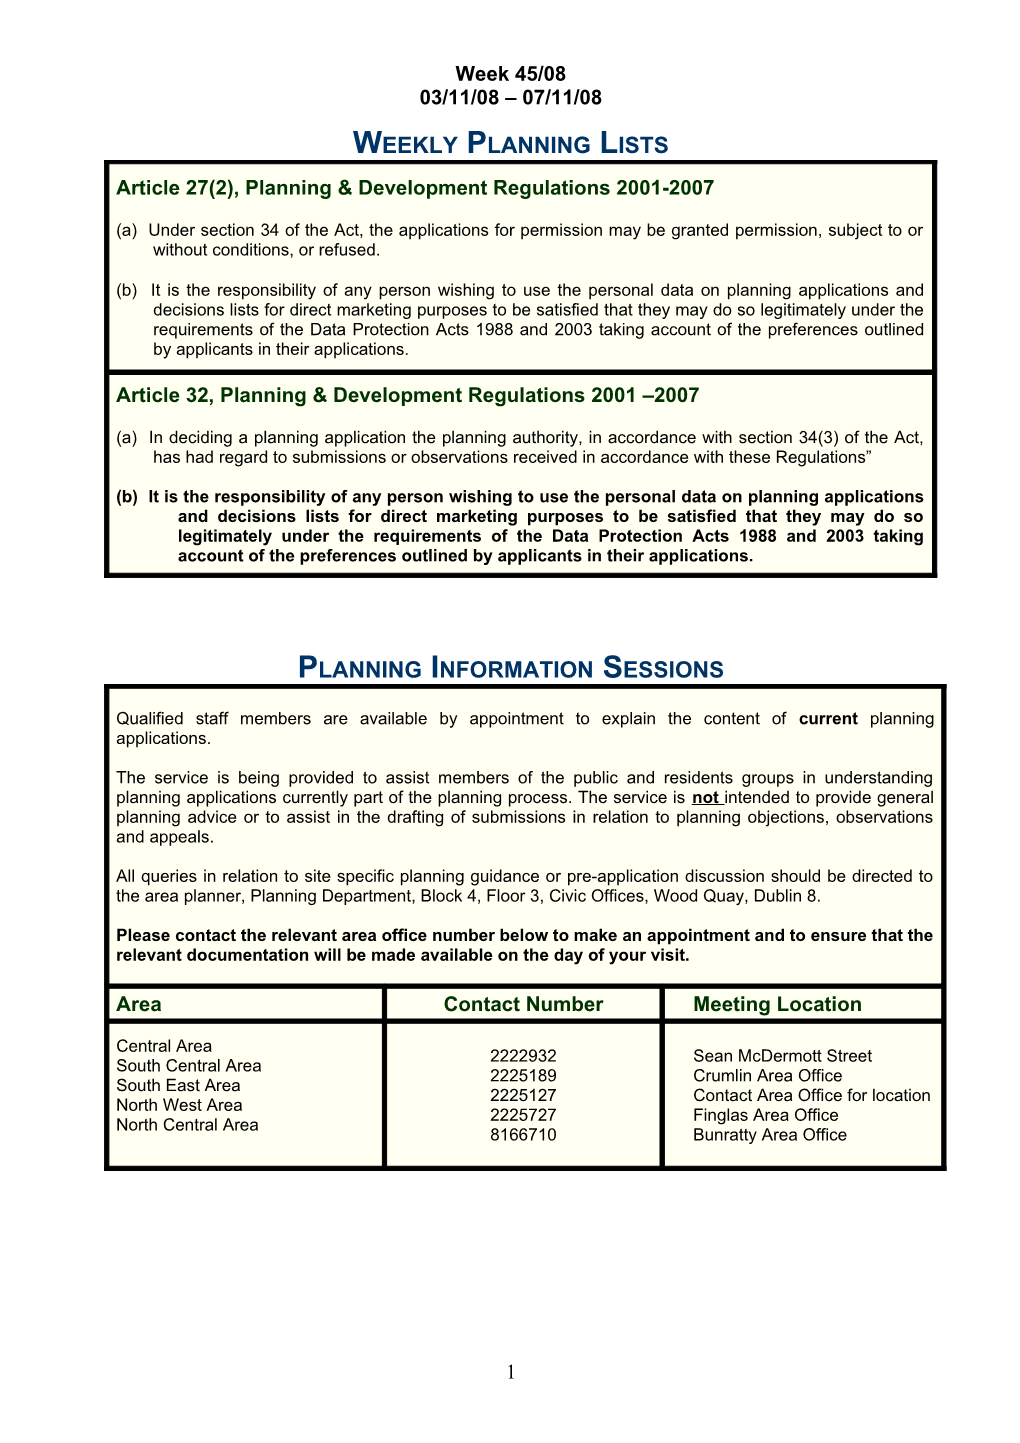 Article 27(2), Planning & Development Regulations 2001-2007